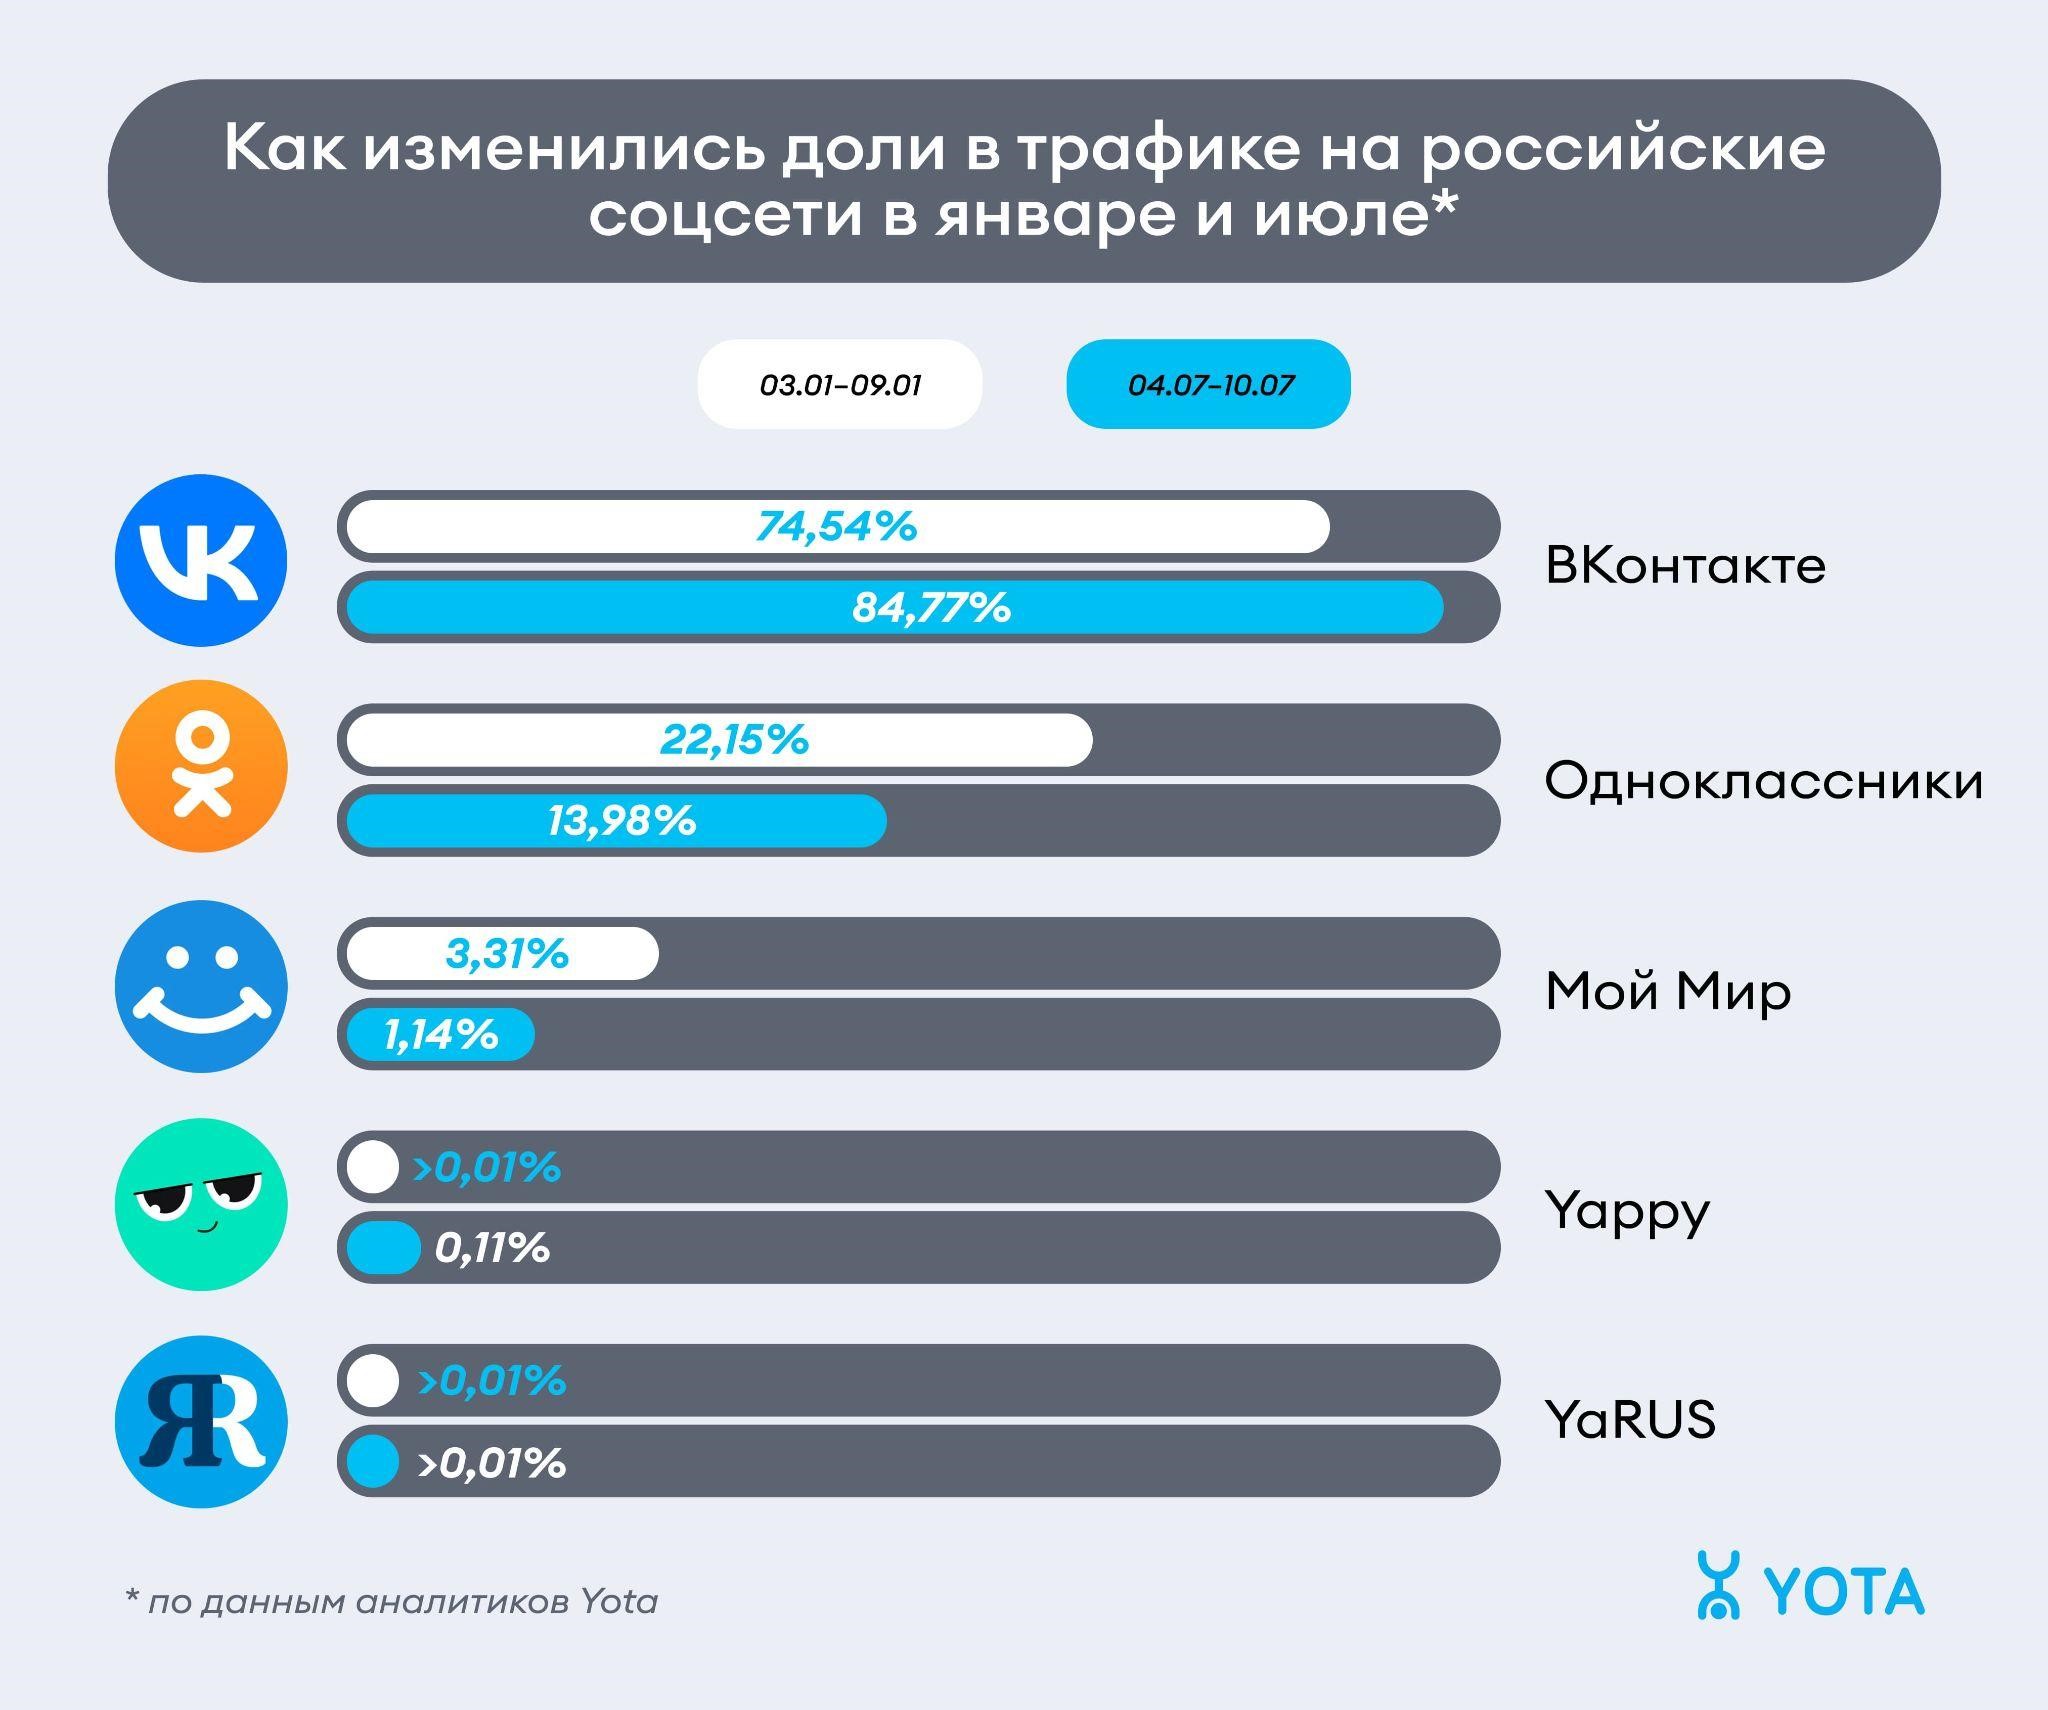 yo2 - Ажиотаж вокруг YaRUS и Yappy спал: анализ интернет-трафика клиентов Yota | Анализ рынков